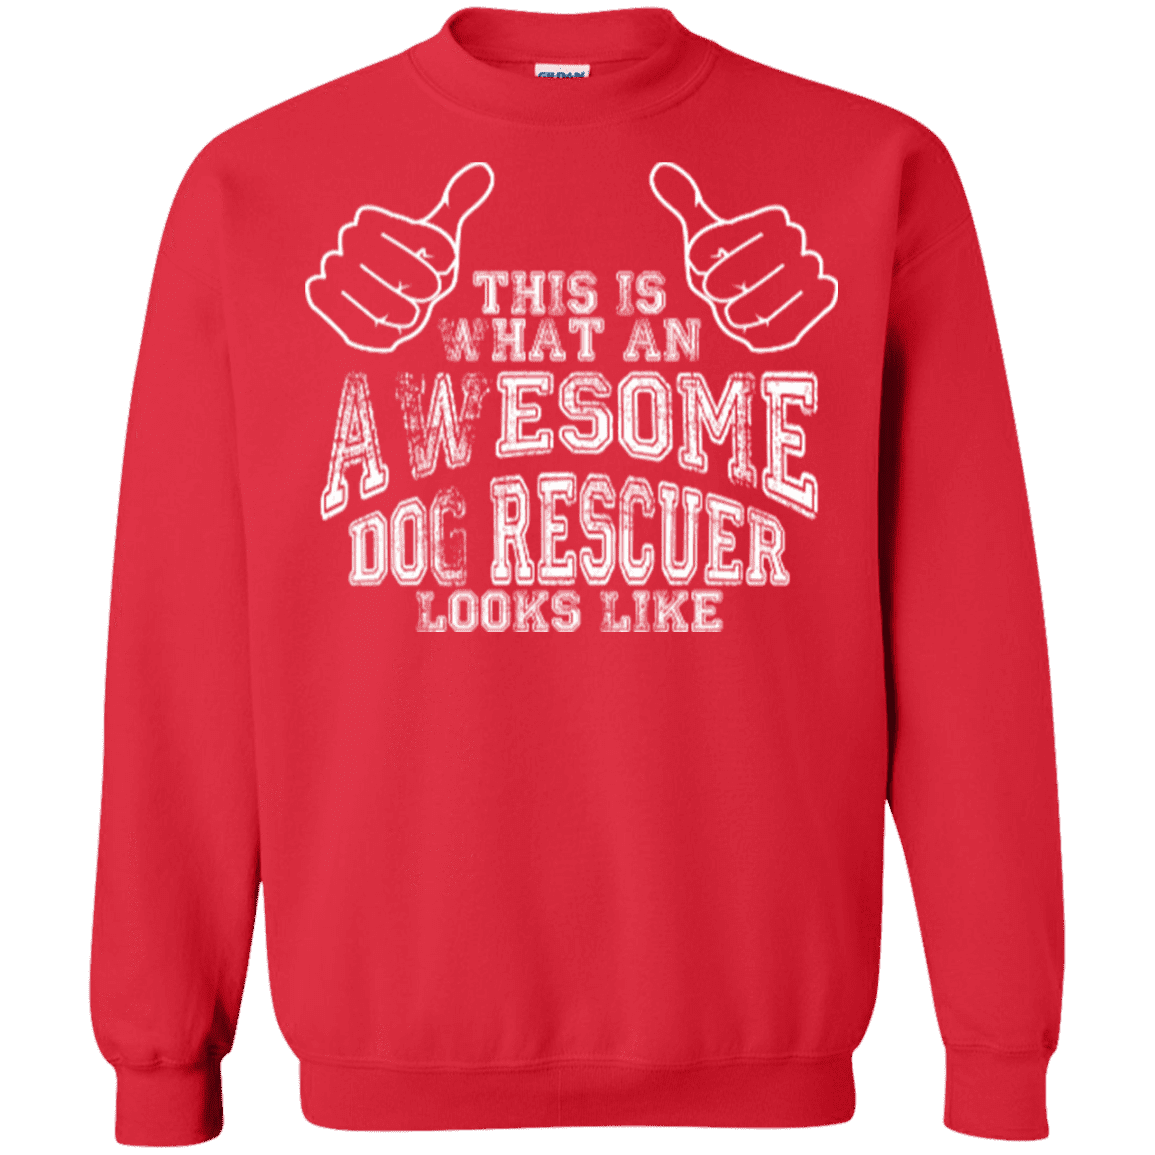 Awesome Dog Rescuer - Sweatshirt.